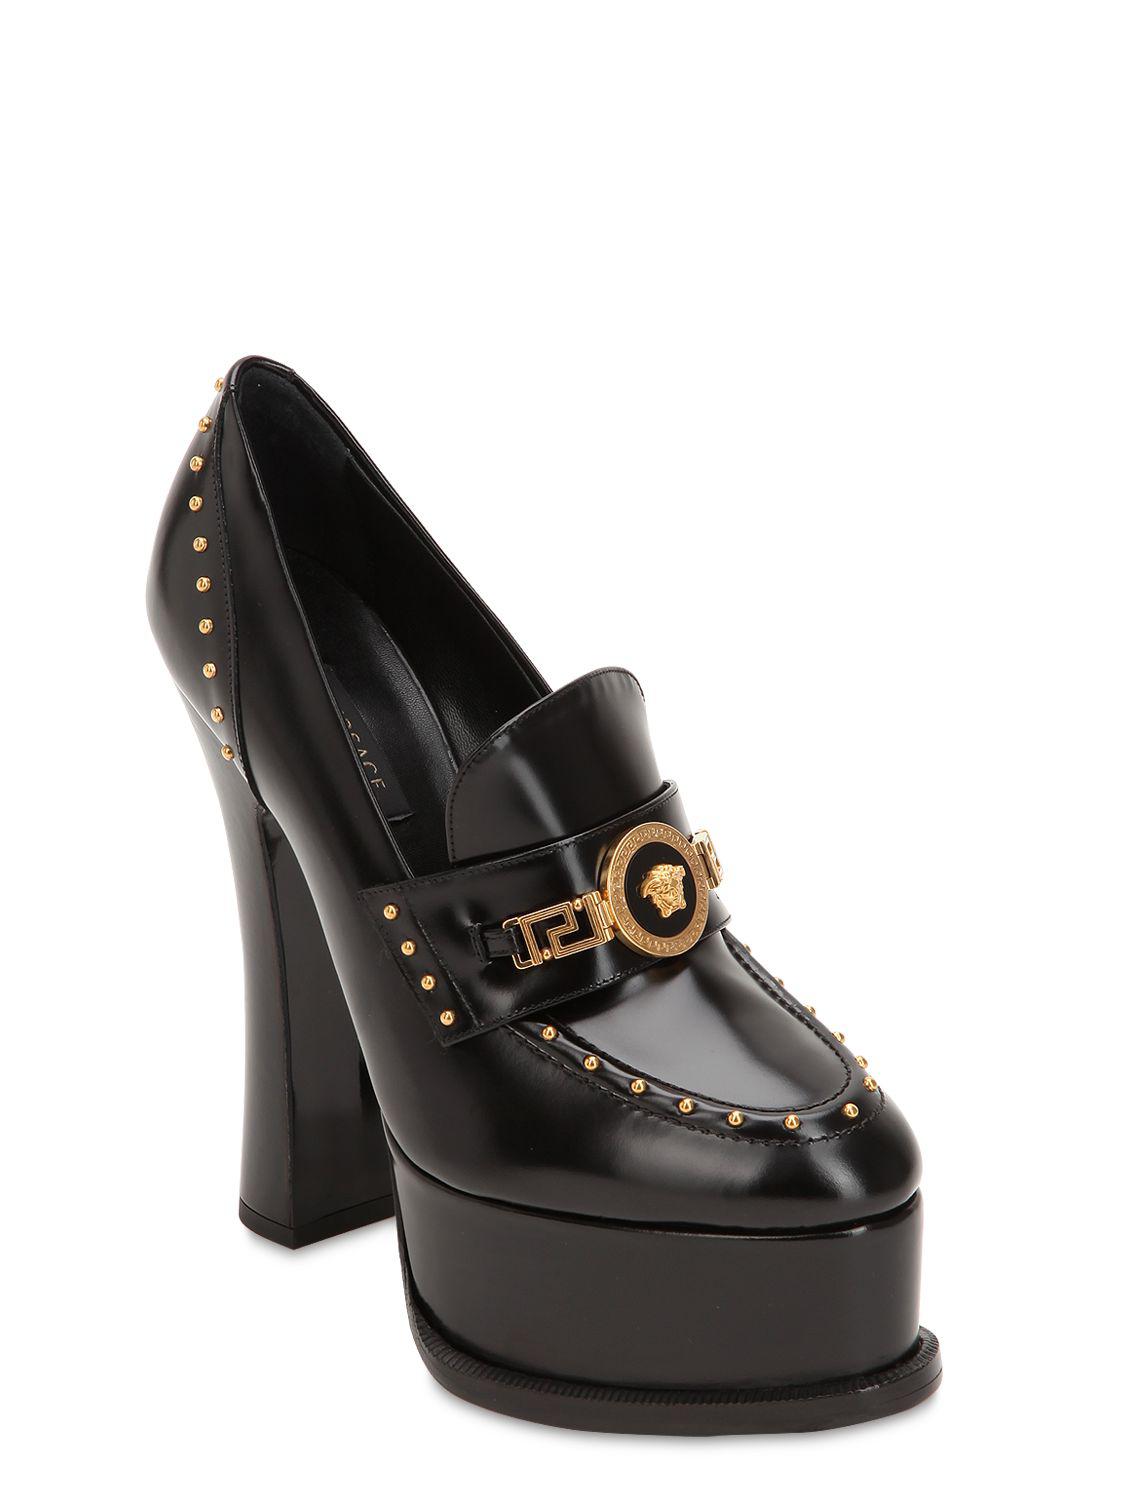 Versace Leather Icon Platform Loafer Heels in Black - Lyst